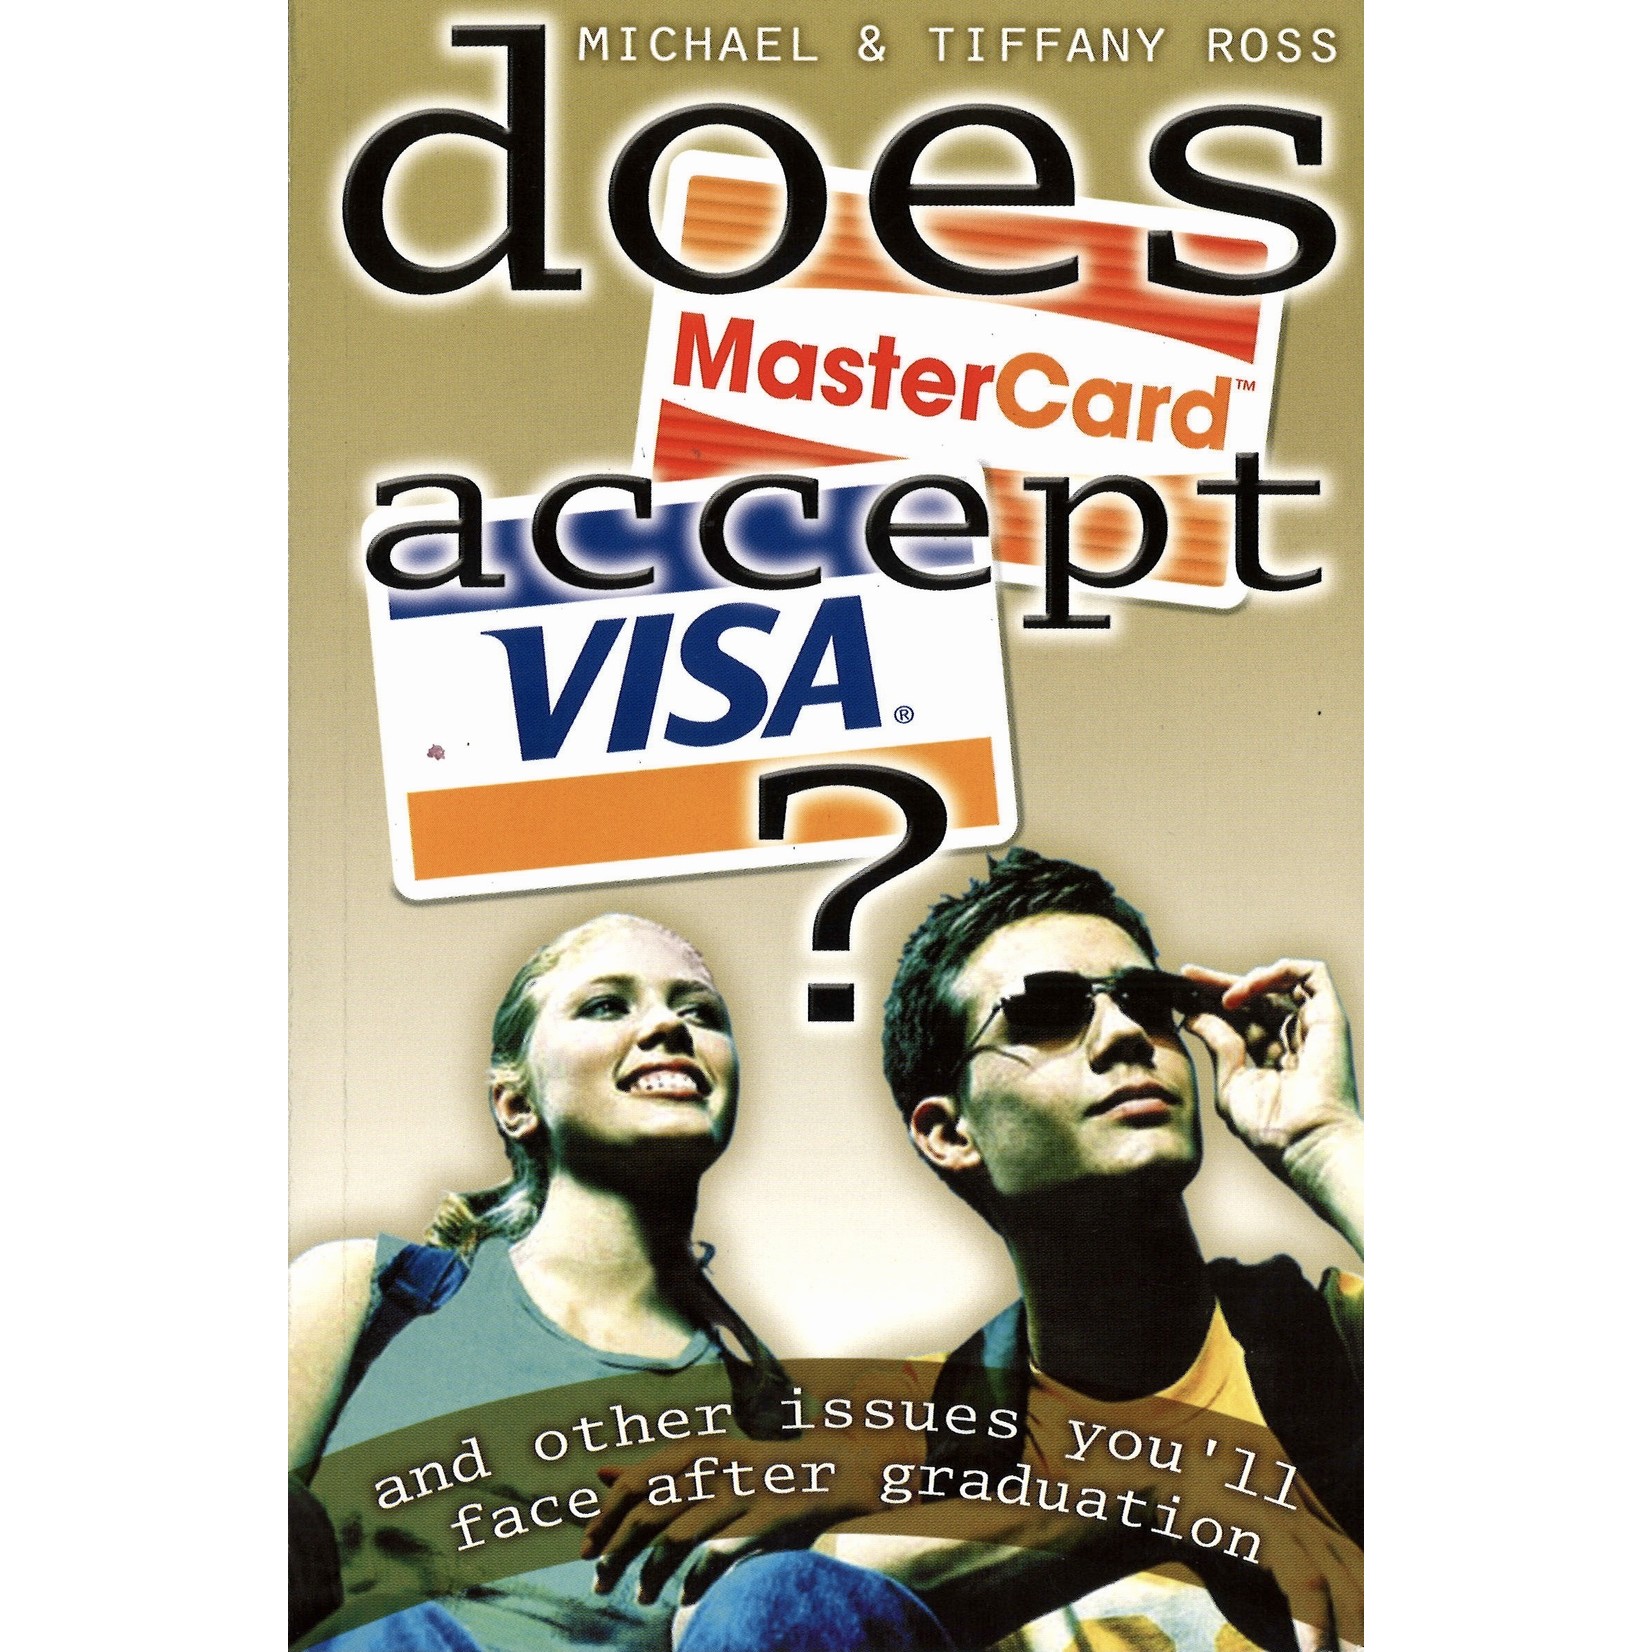 DOES MASTERCARD ACCEPT VISA?